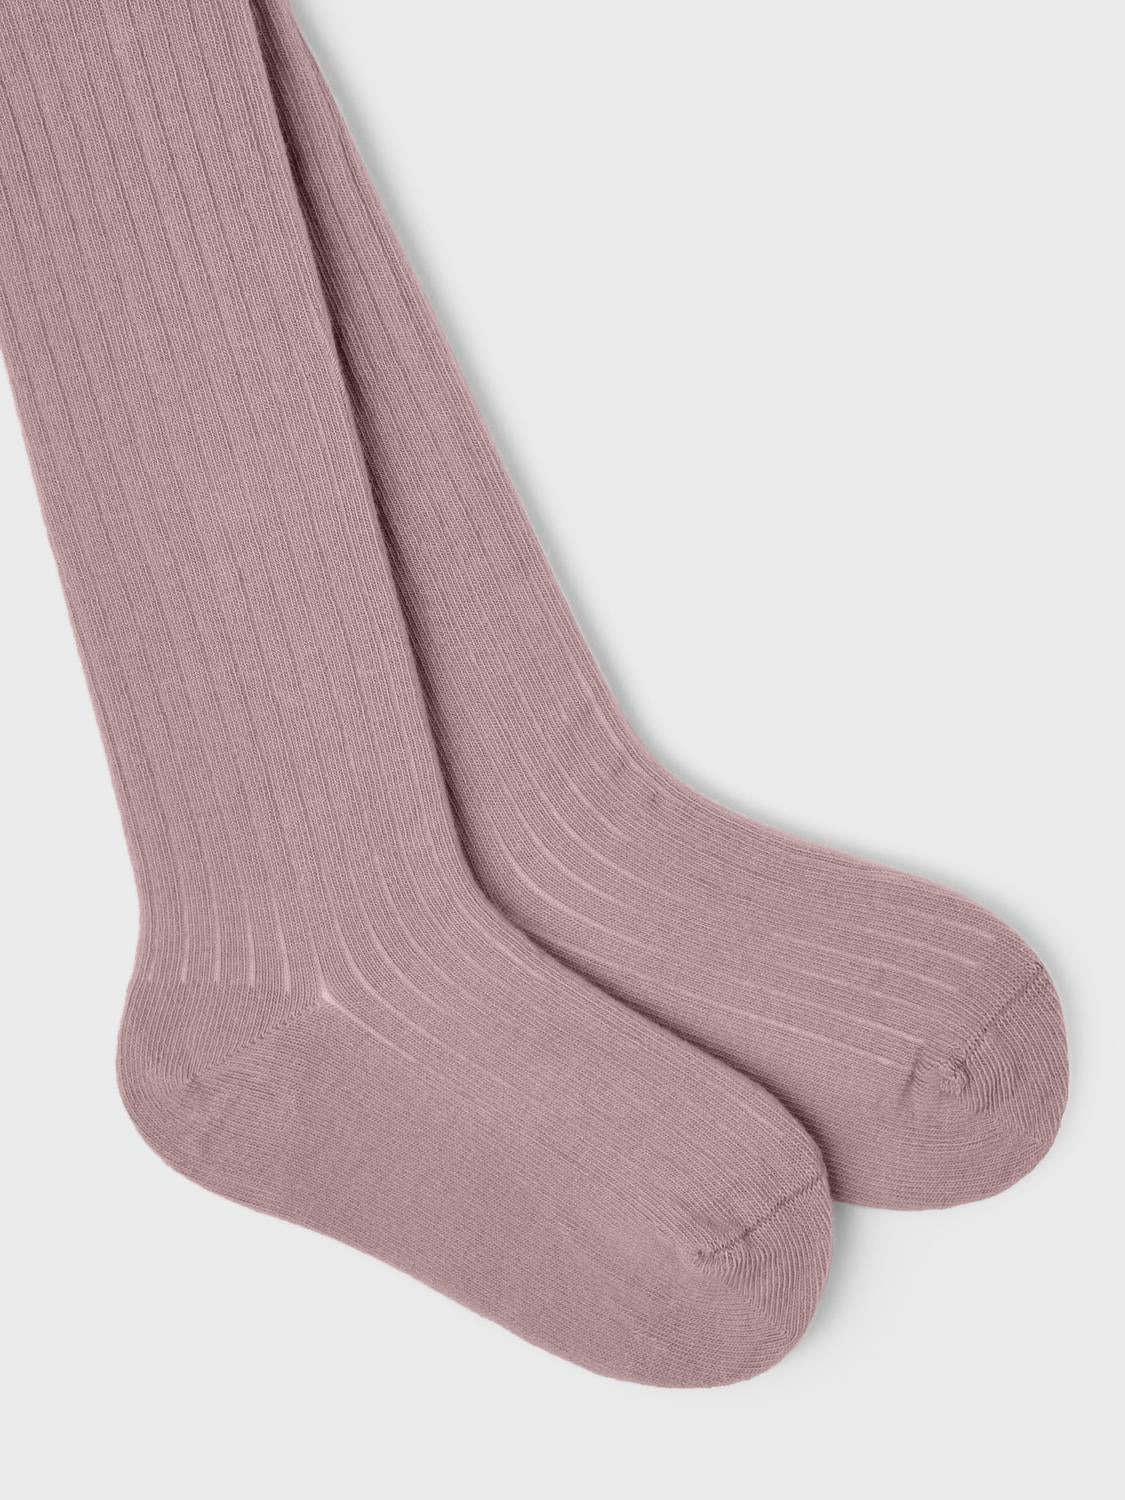 NKNPANTYHOSE Socks - Woodrose